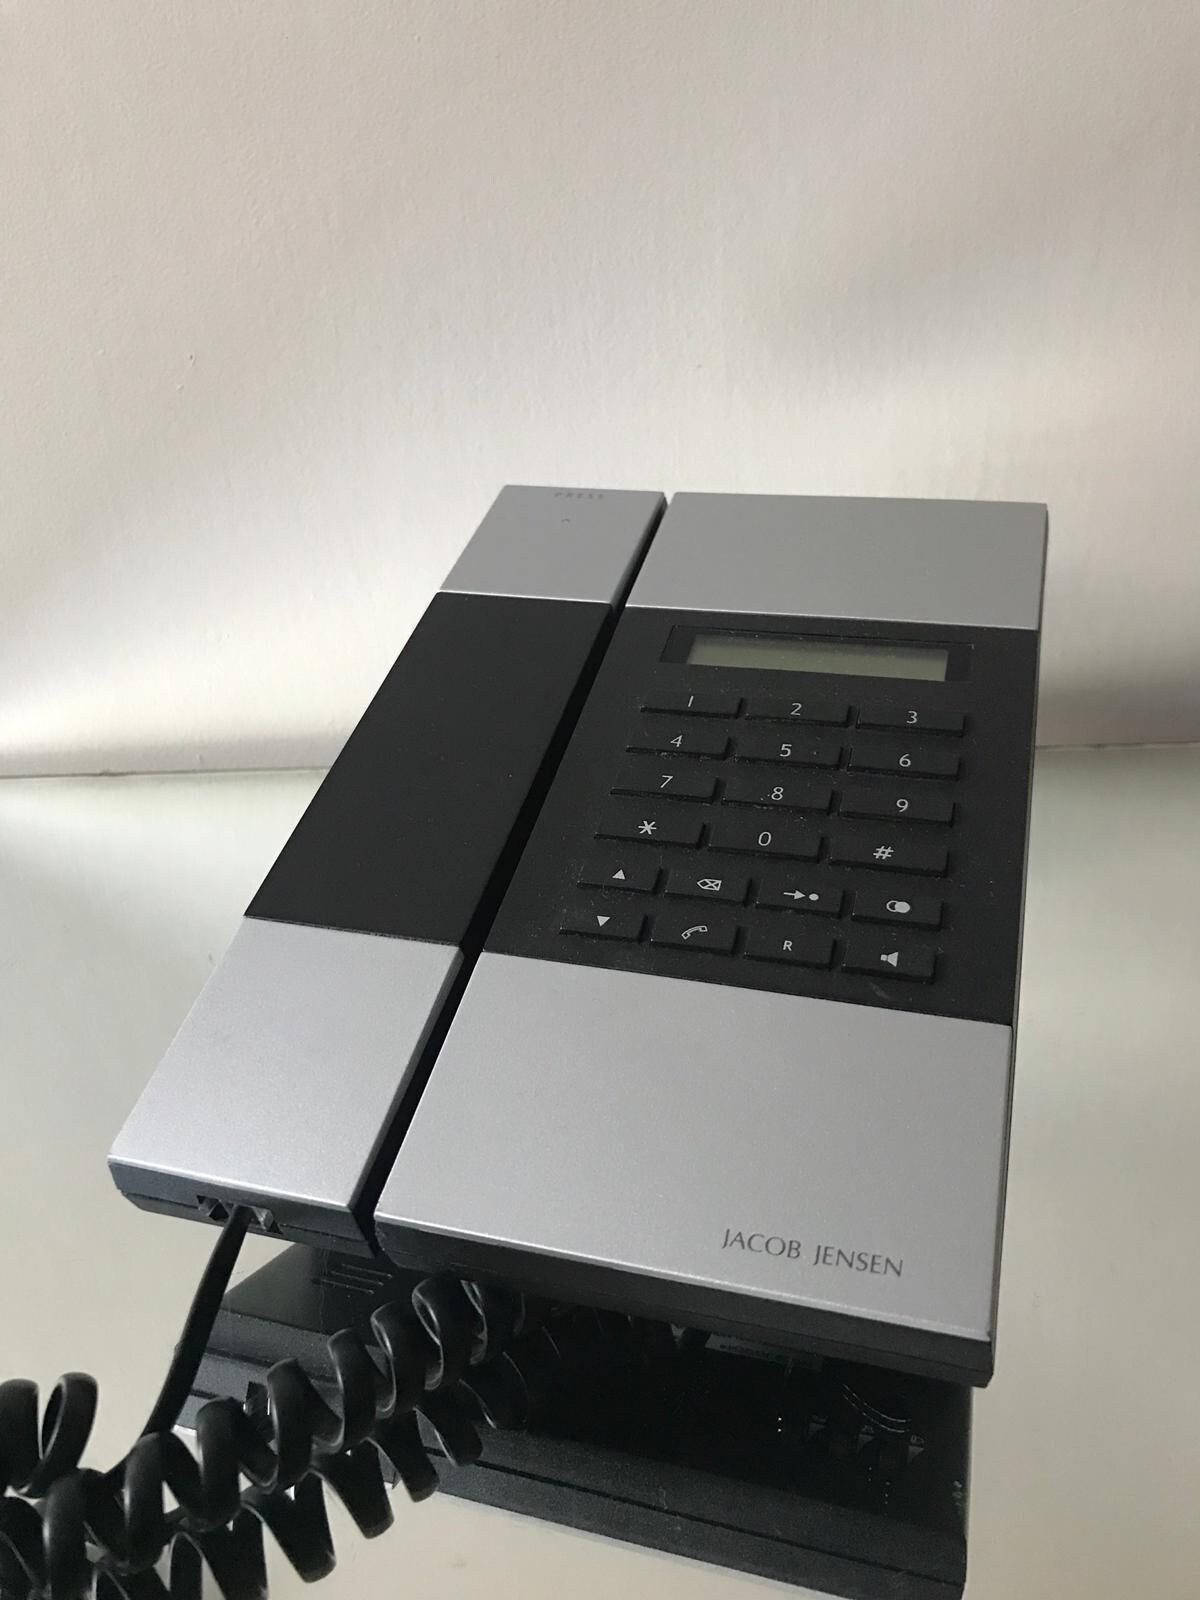 Jacob Jensen Desk Model VINTAGE 1990s Phone | Etsy